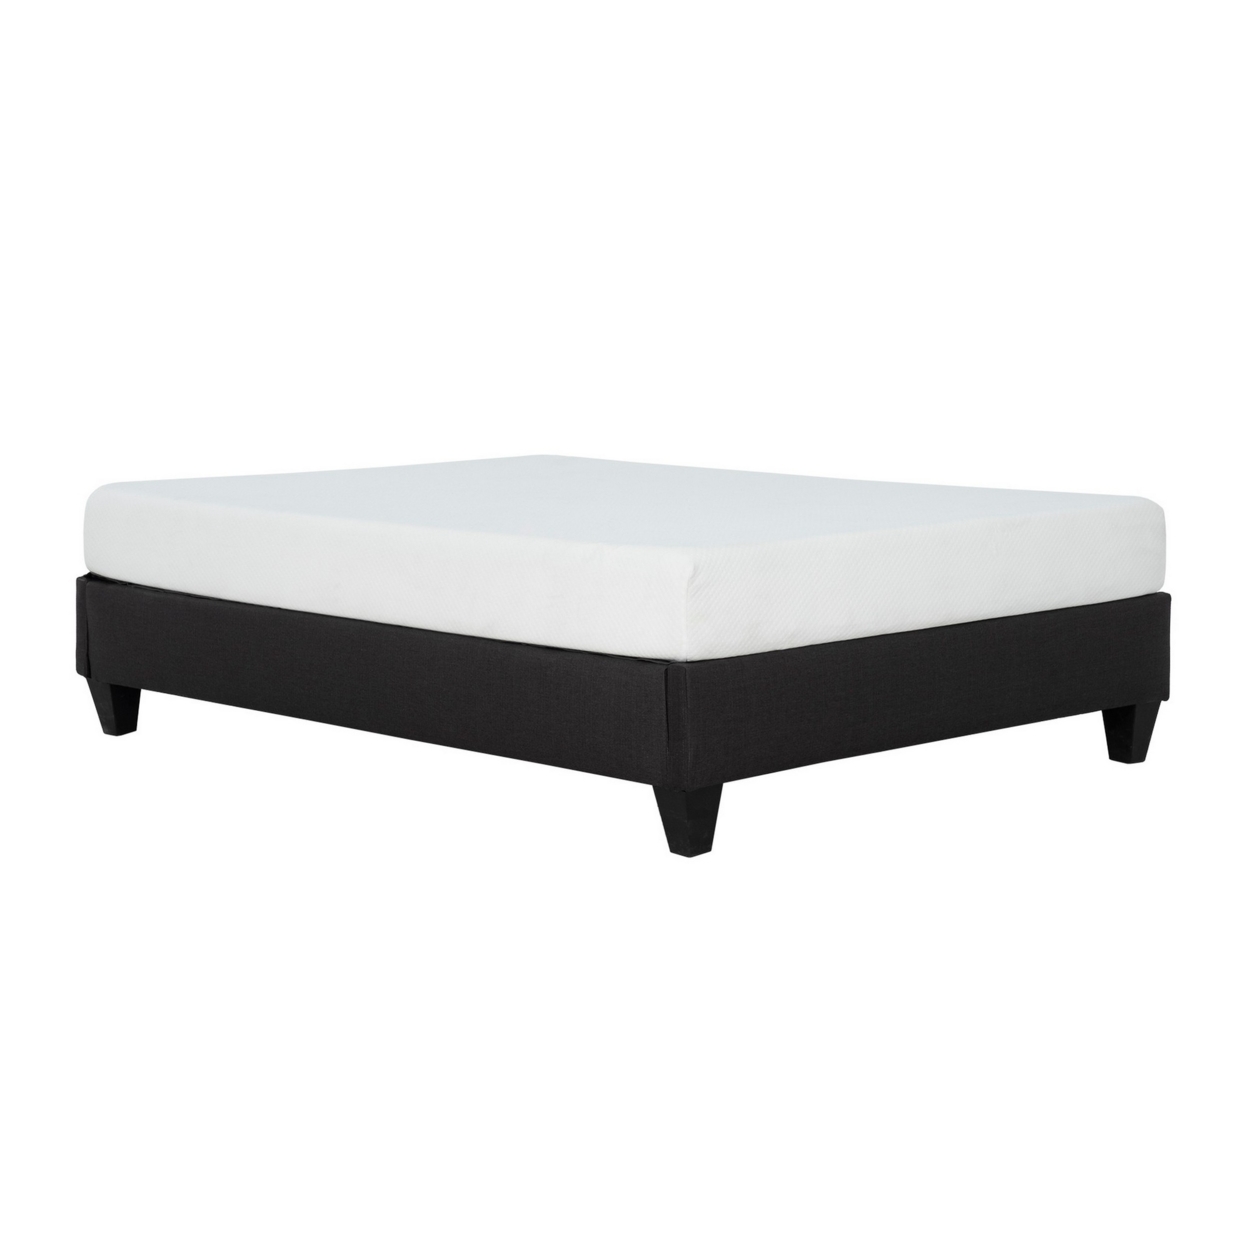 Cleo Queen Size Bed Frame, Solid Wood, Soft Dark Gray Linen Upholstery- Saltoro Sherpi